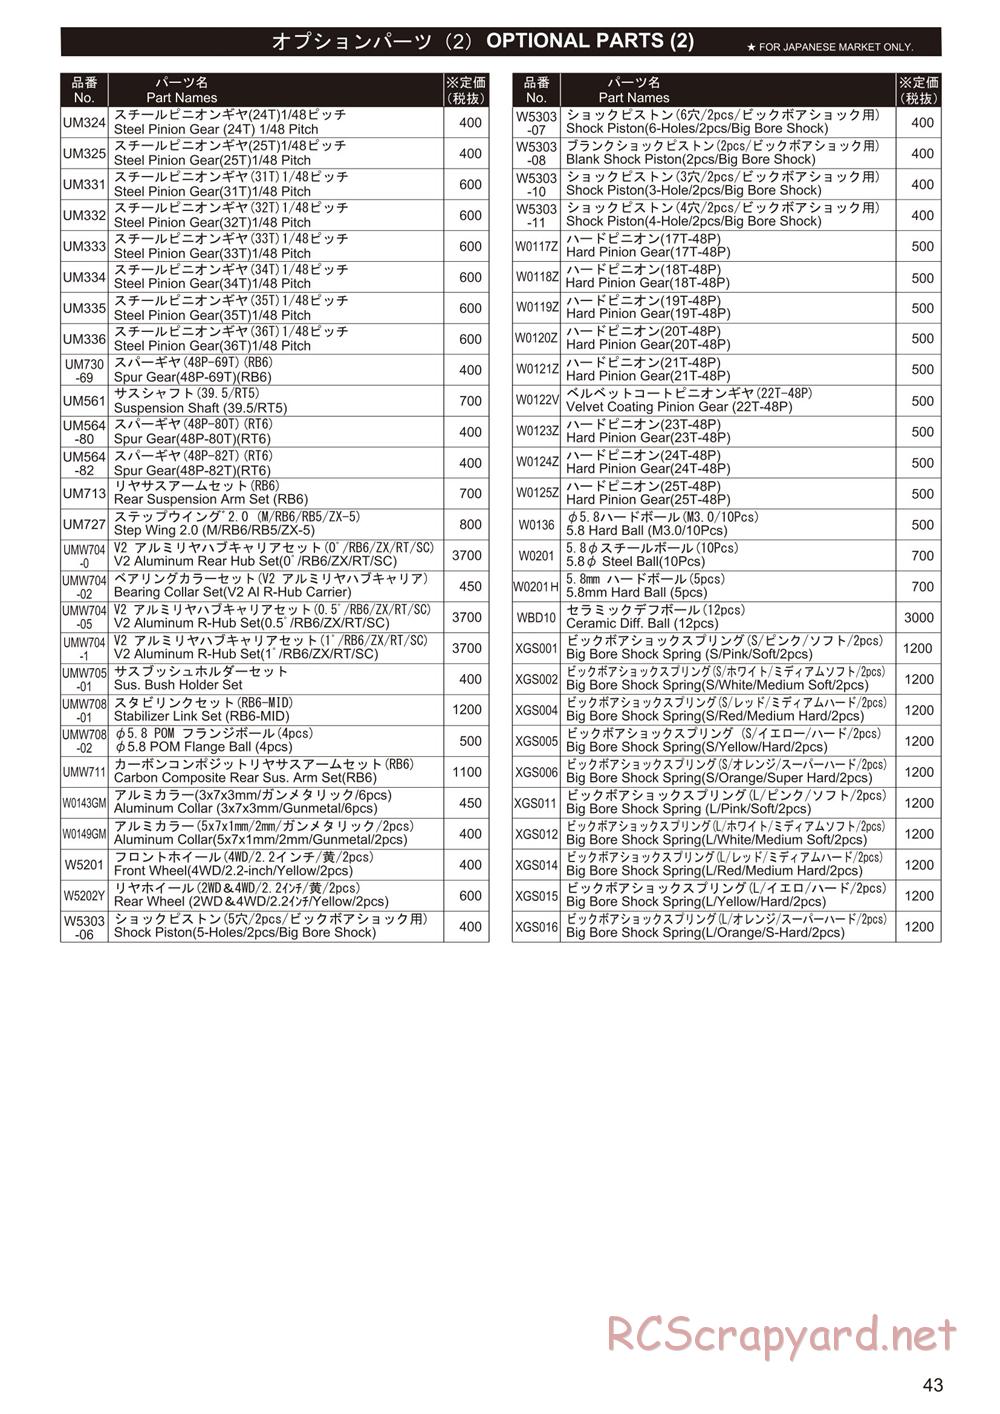 Kyosho - Lazer ZX-6 - Parts List - Page 3